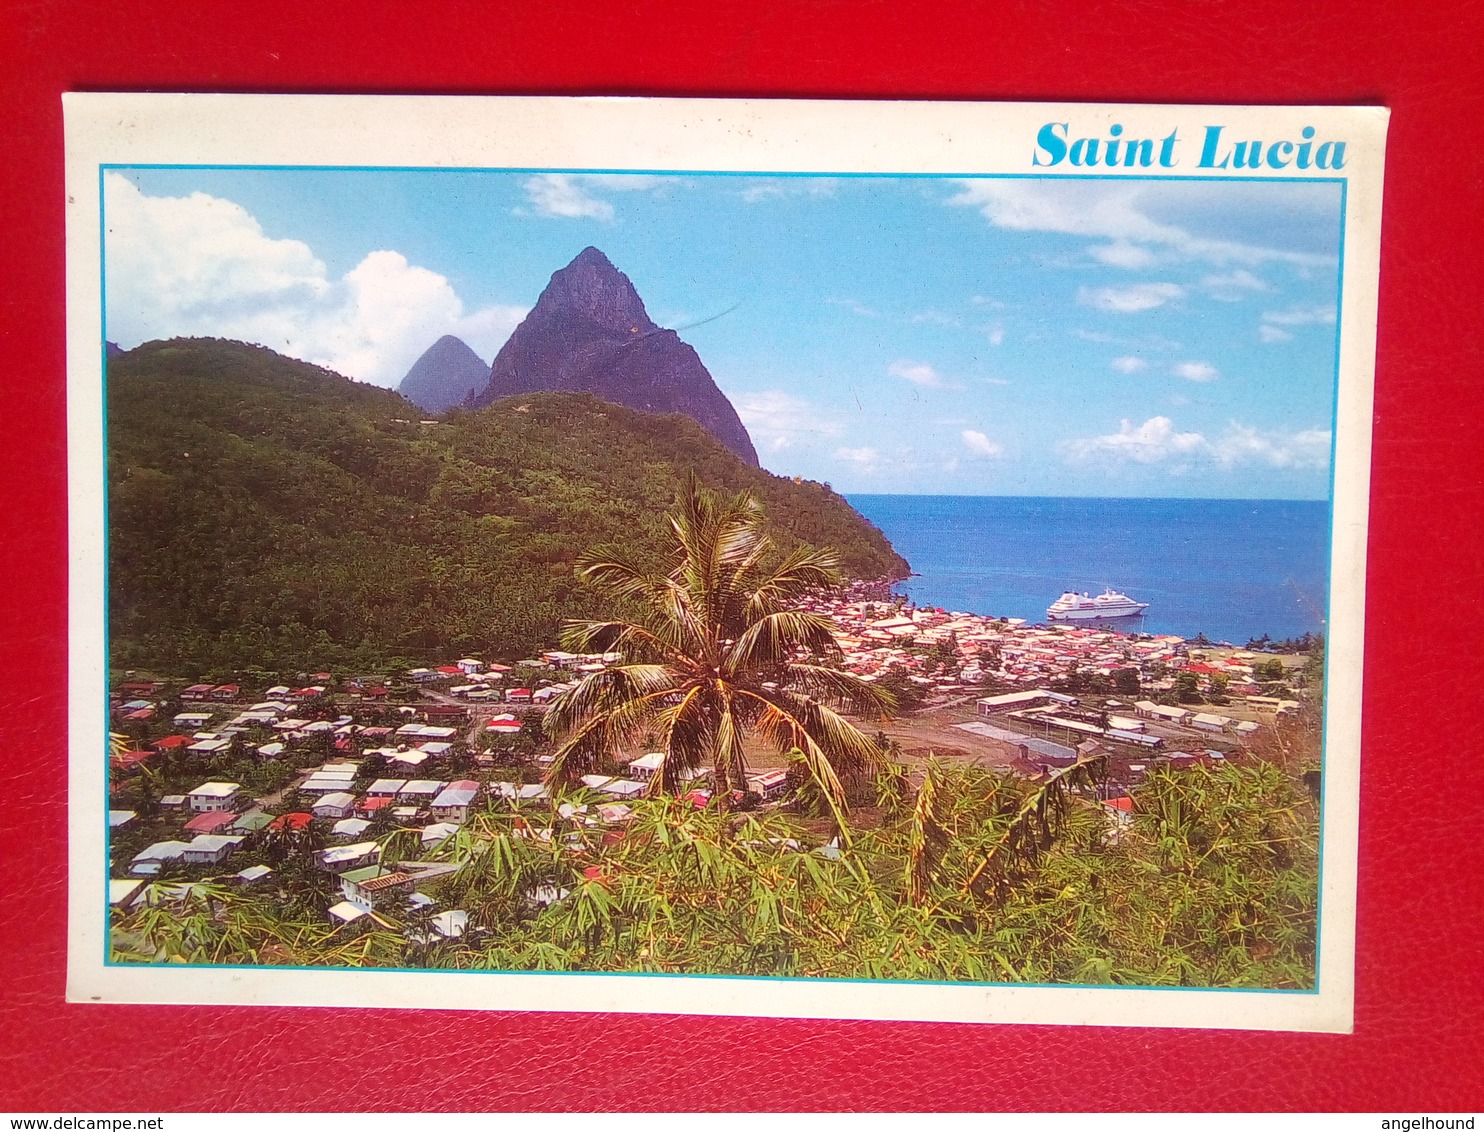 Saint Lucia - Saint Lucia